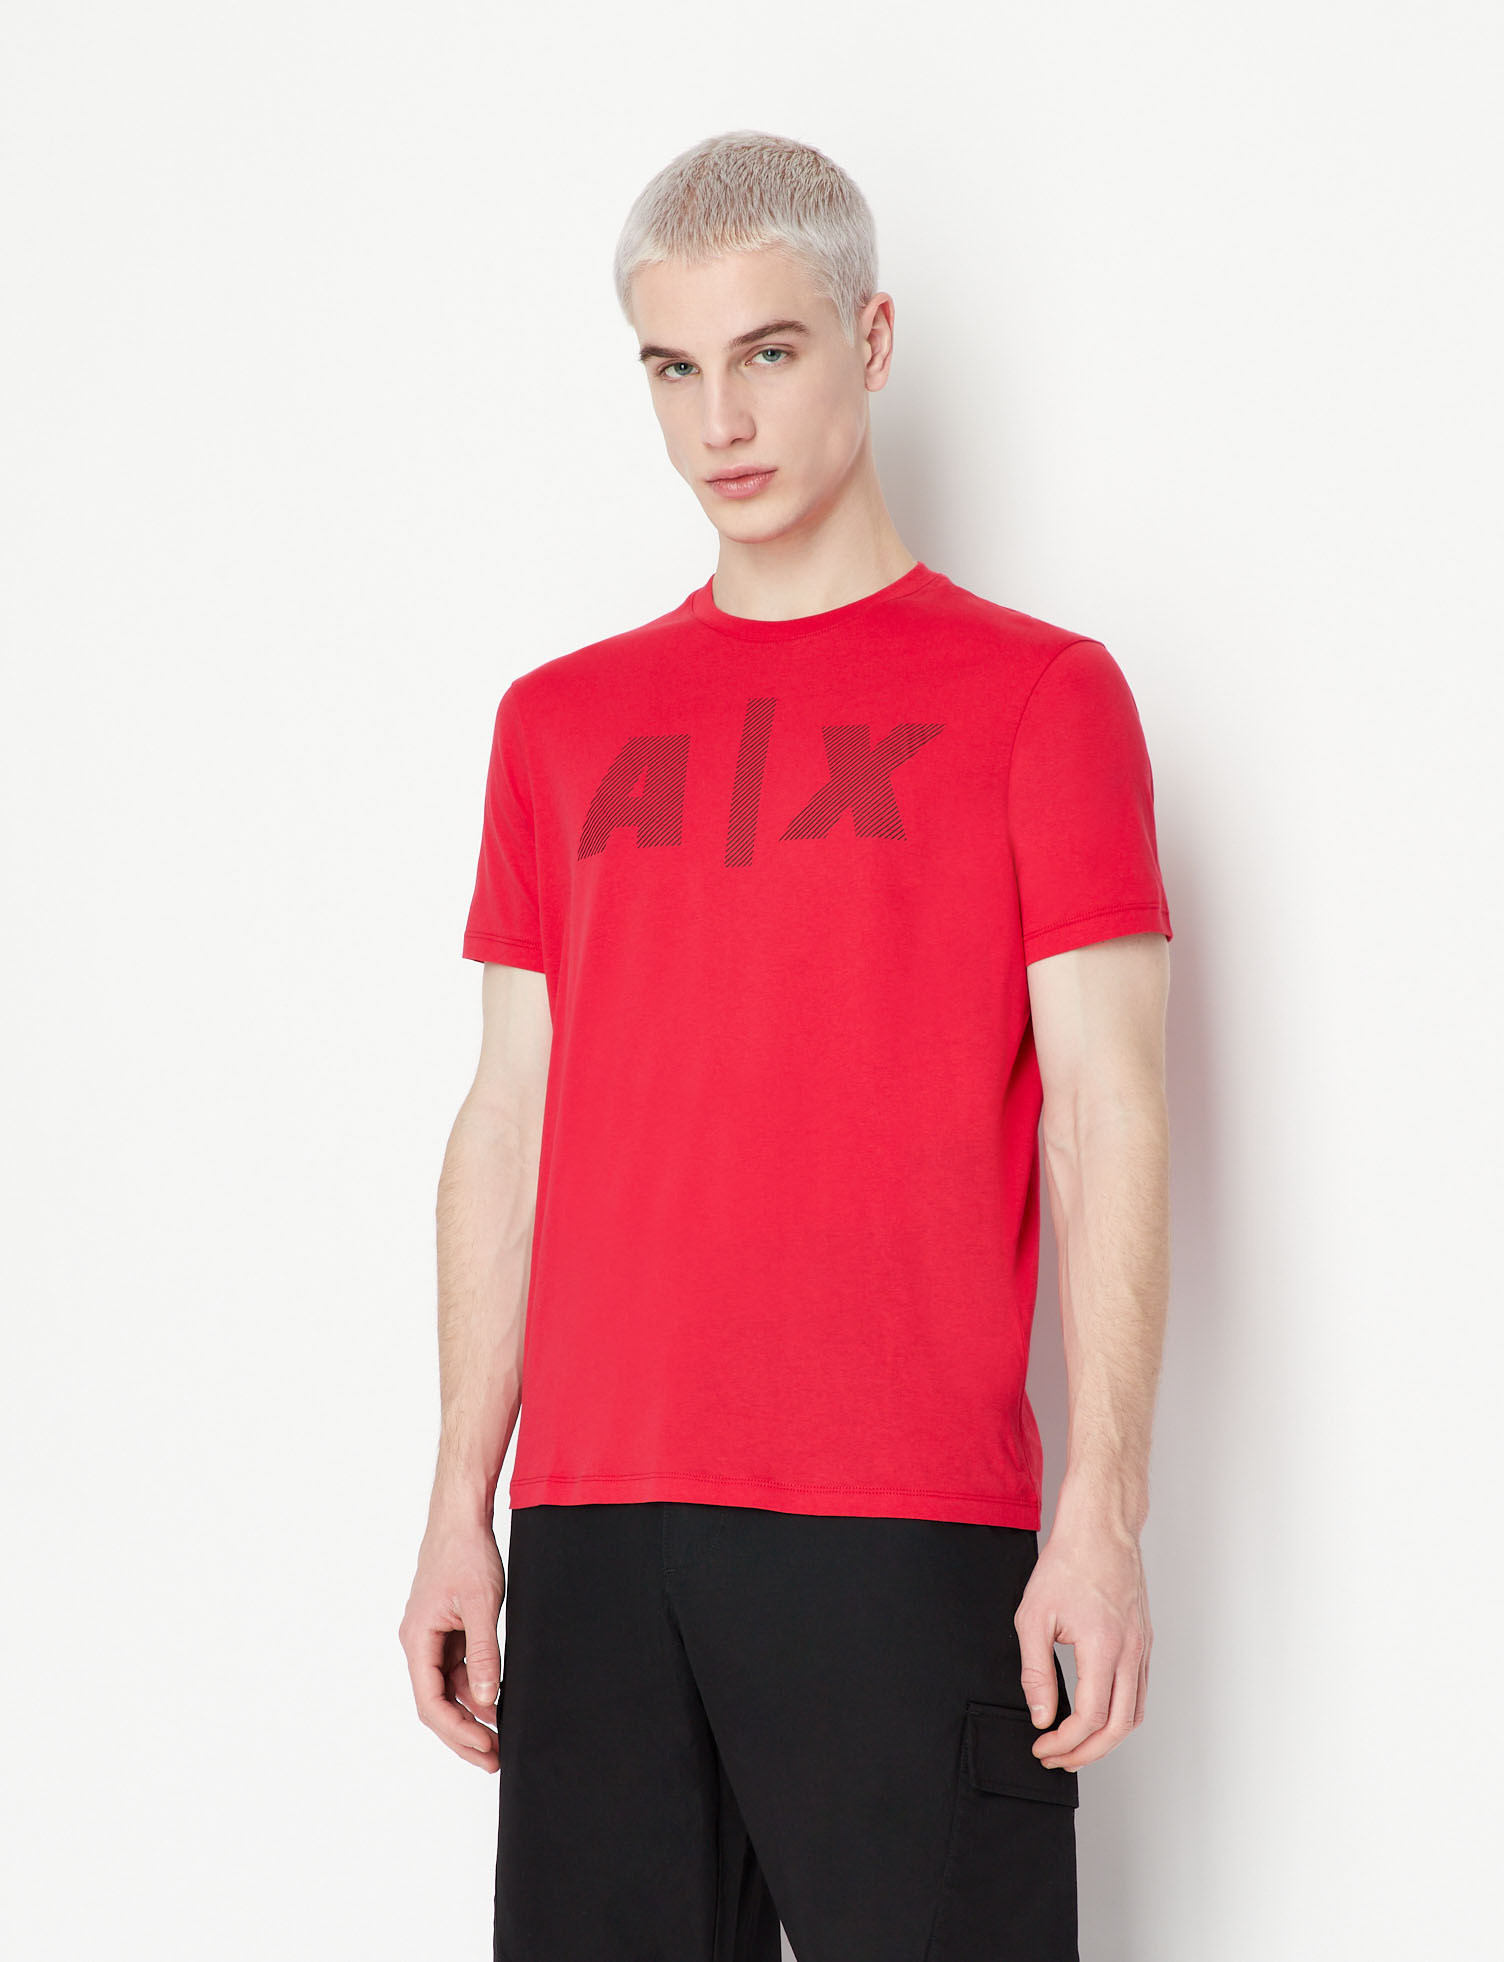 Armani Exchange - T-shirt con stampa logo regular fit, Rosso, large image number 1